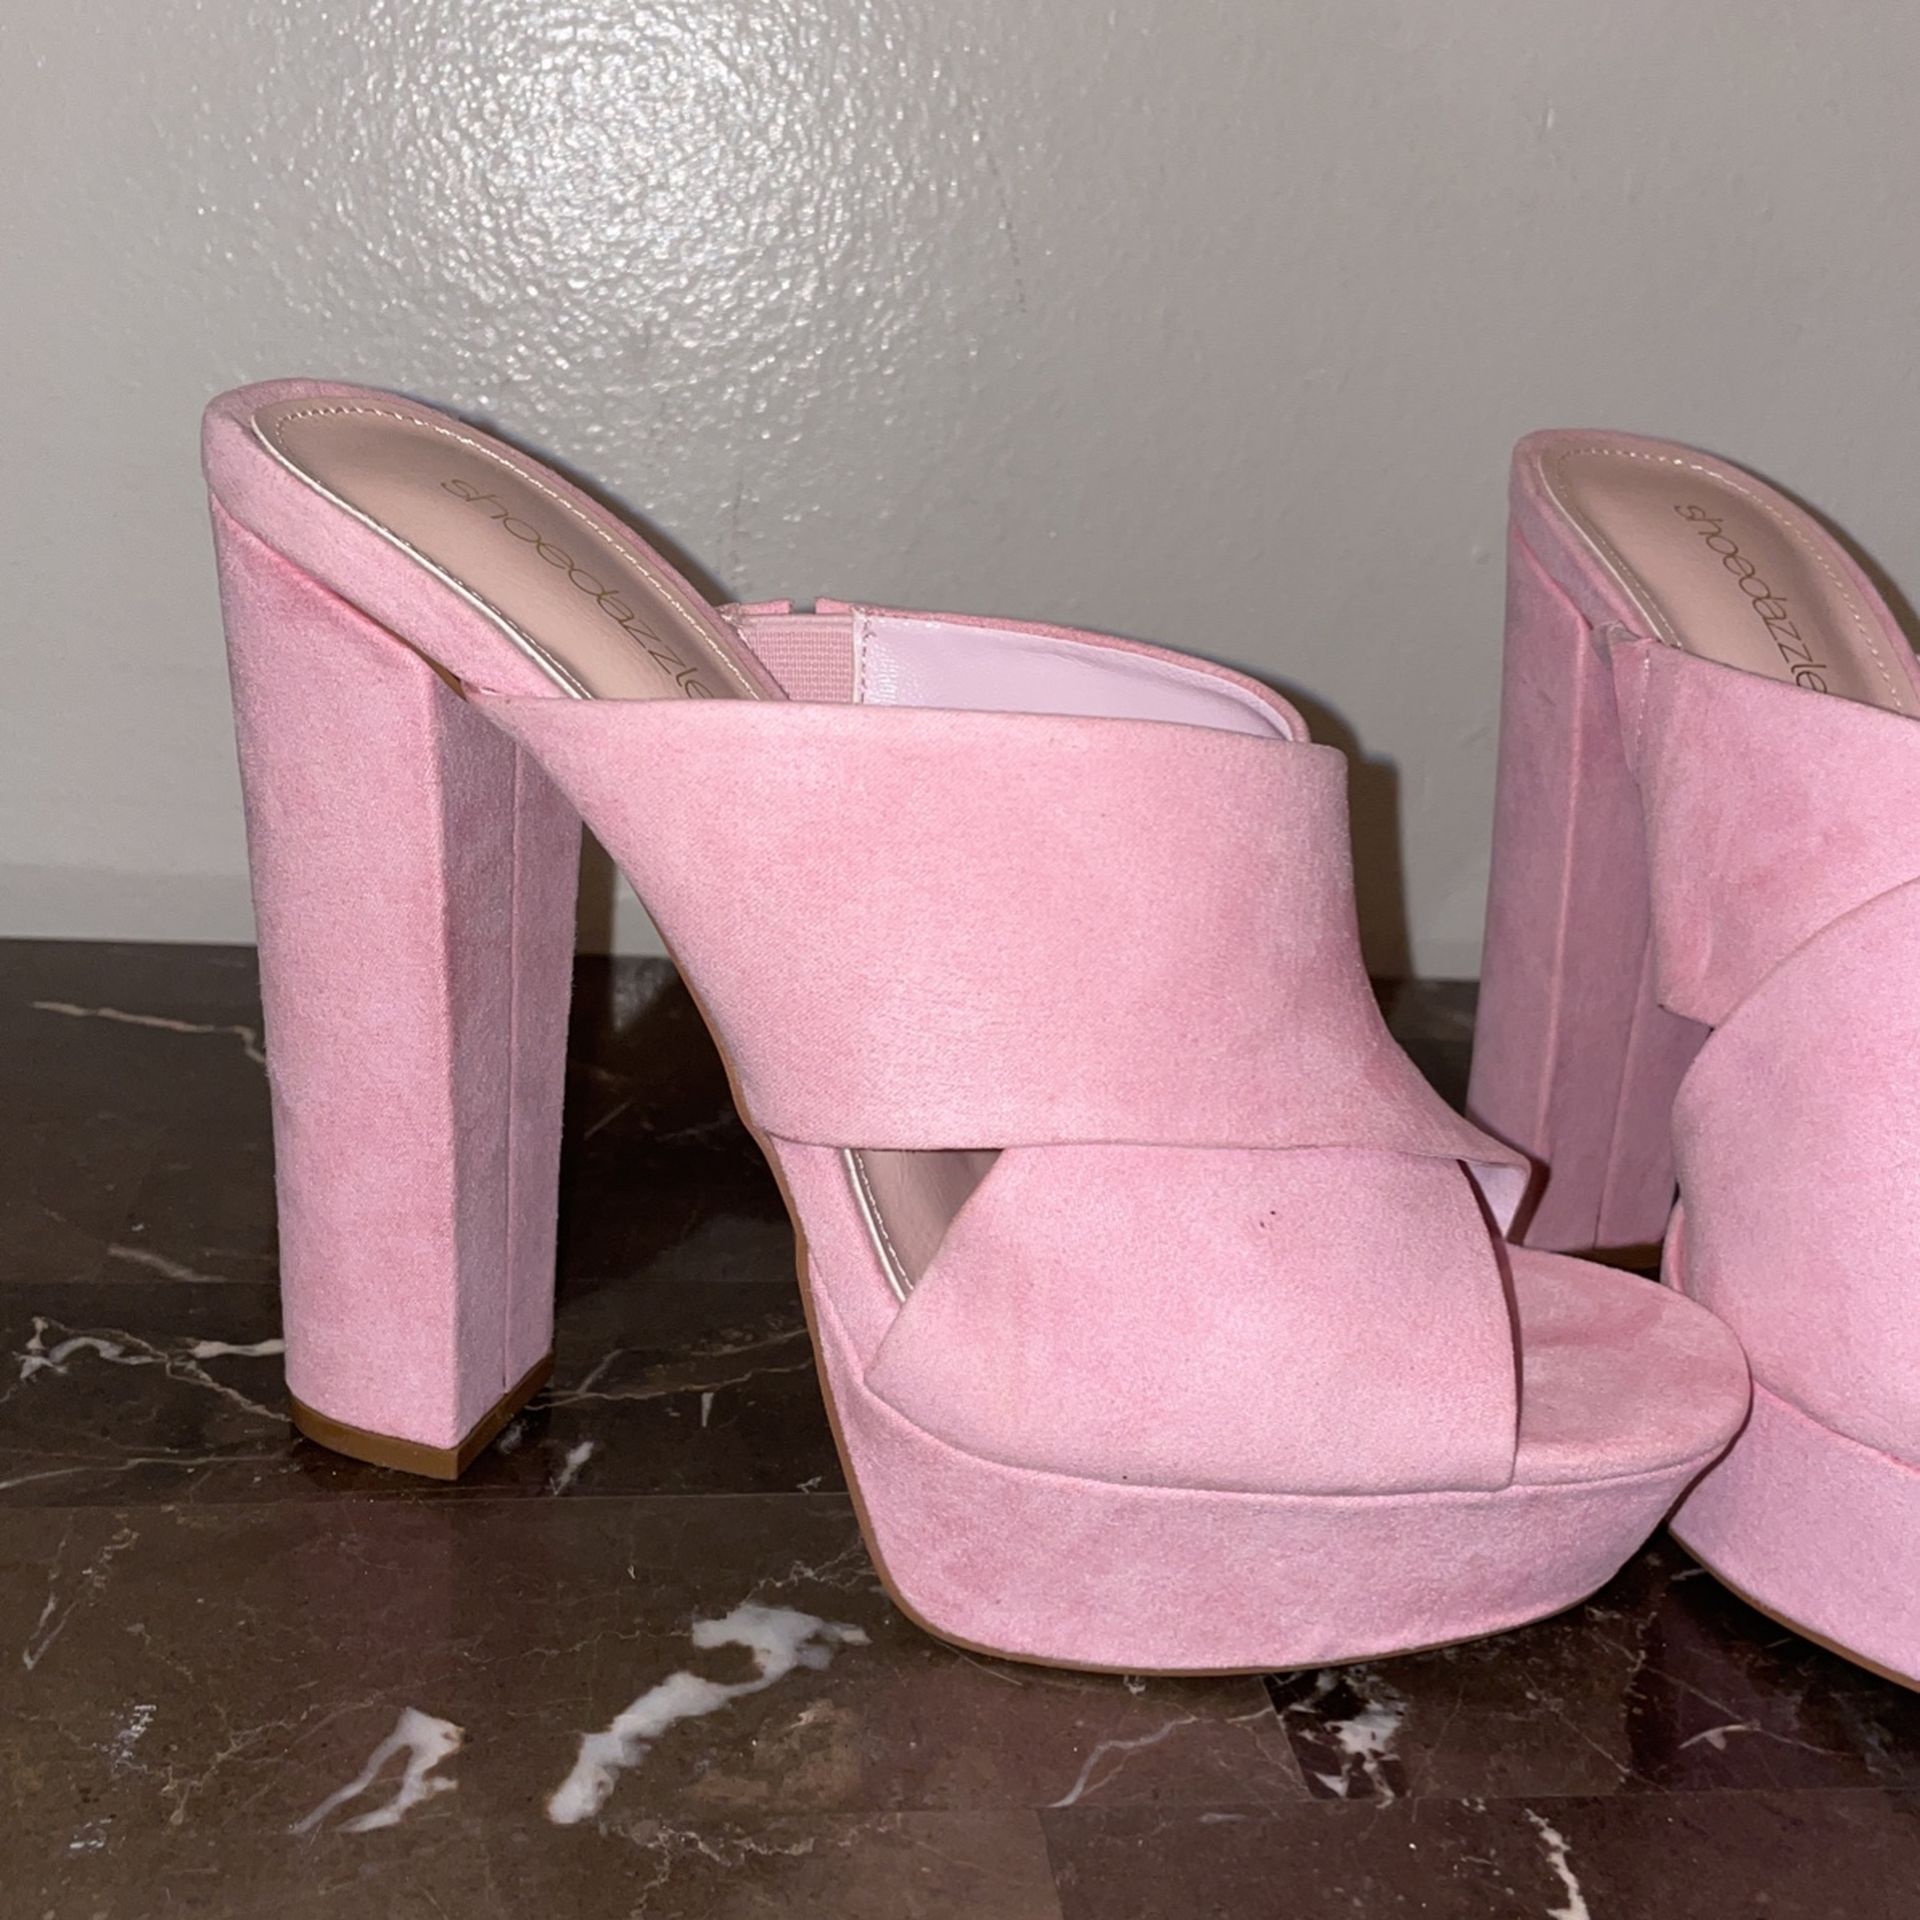 Pink Suede Platform Heels for Sale in Riverside, CA - OfferUp